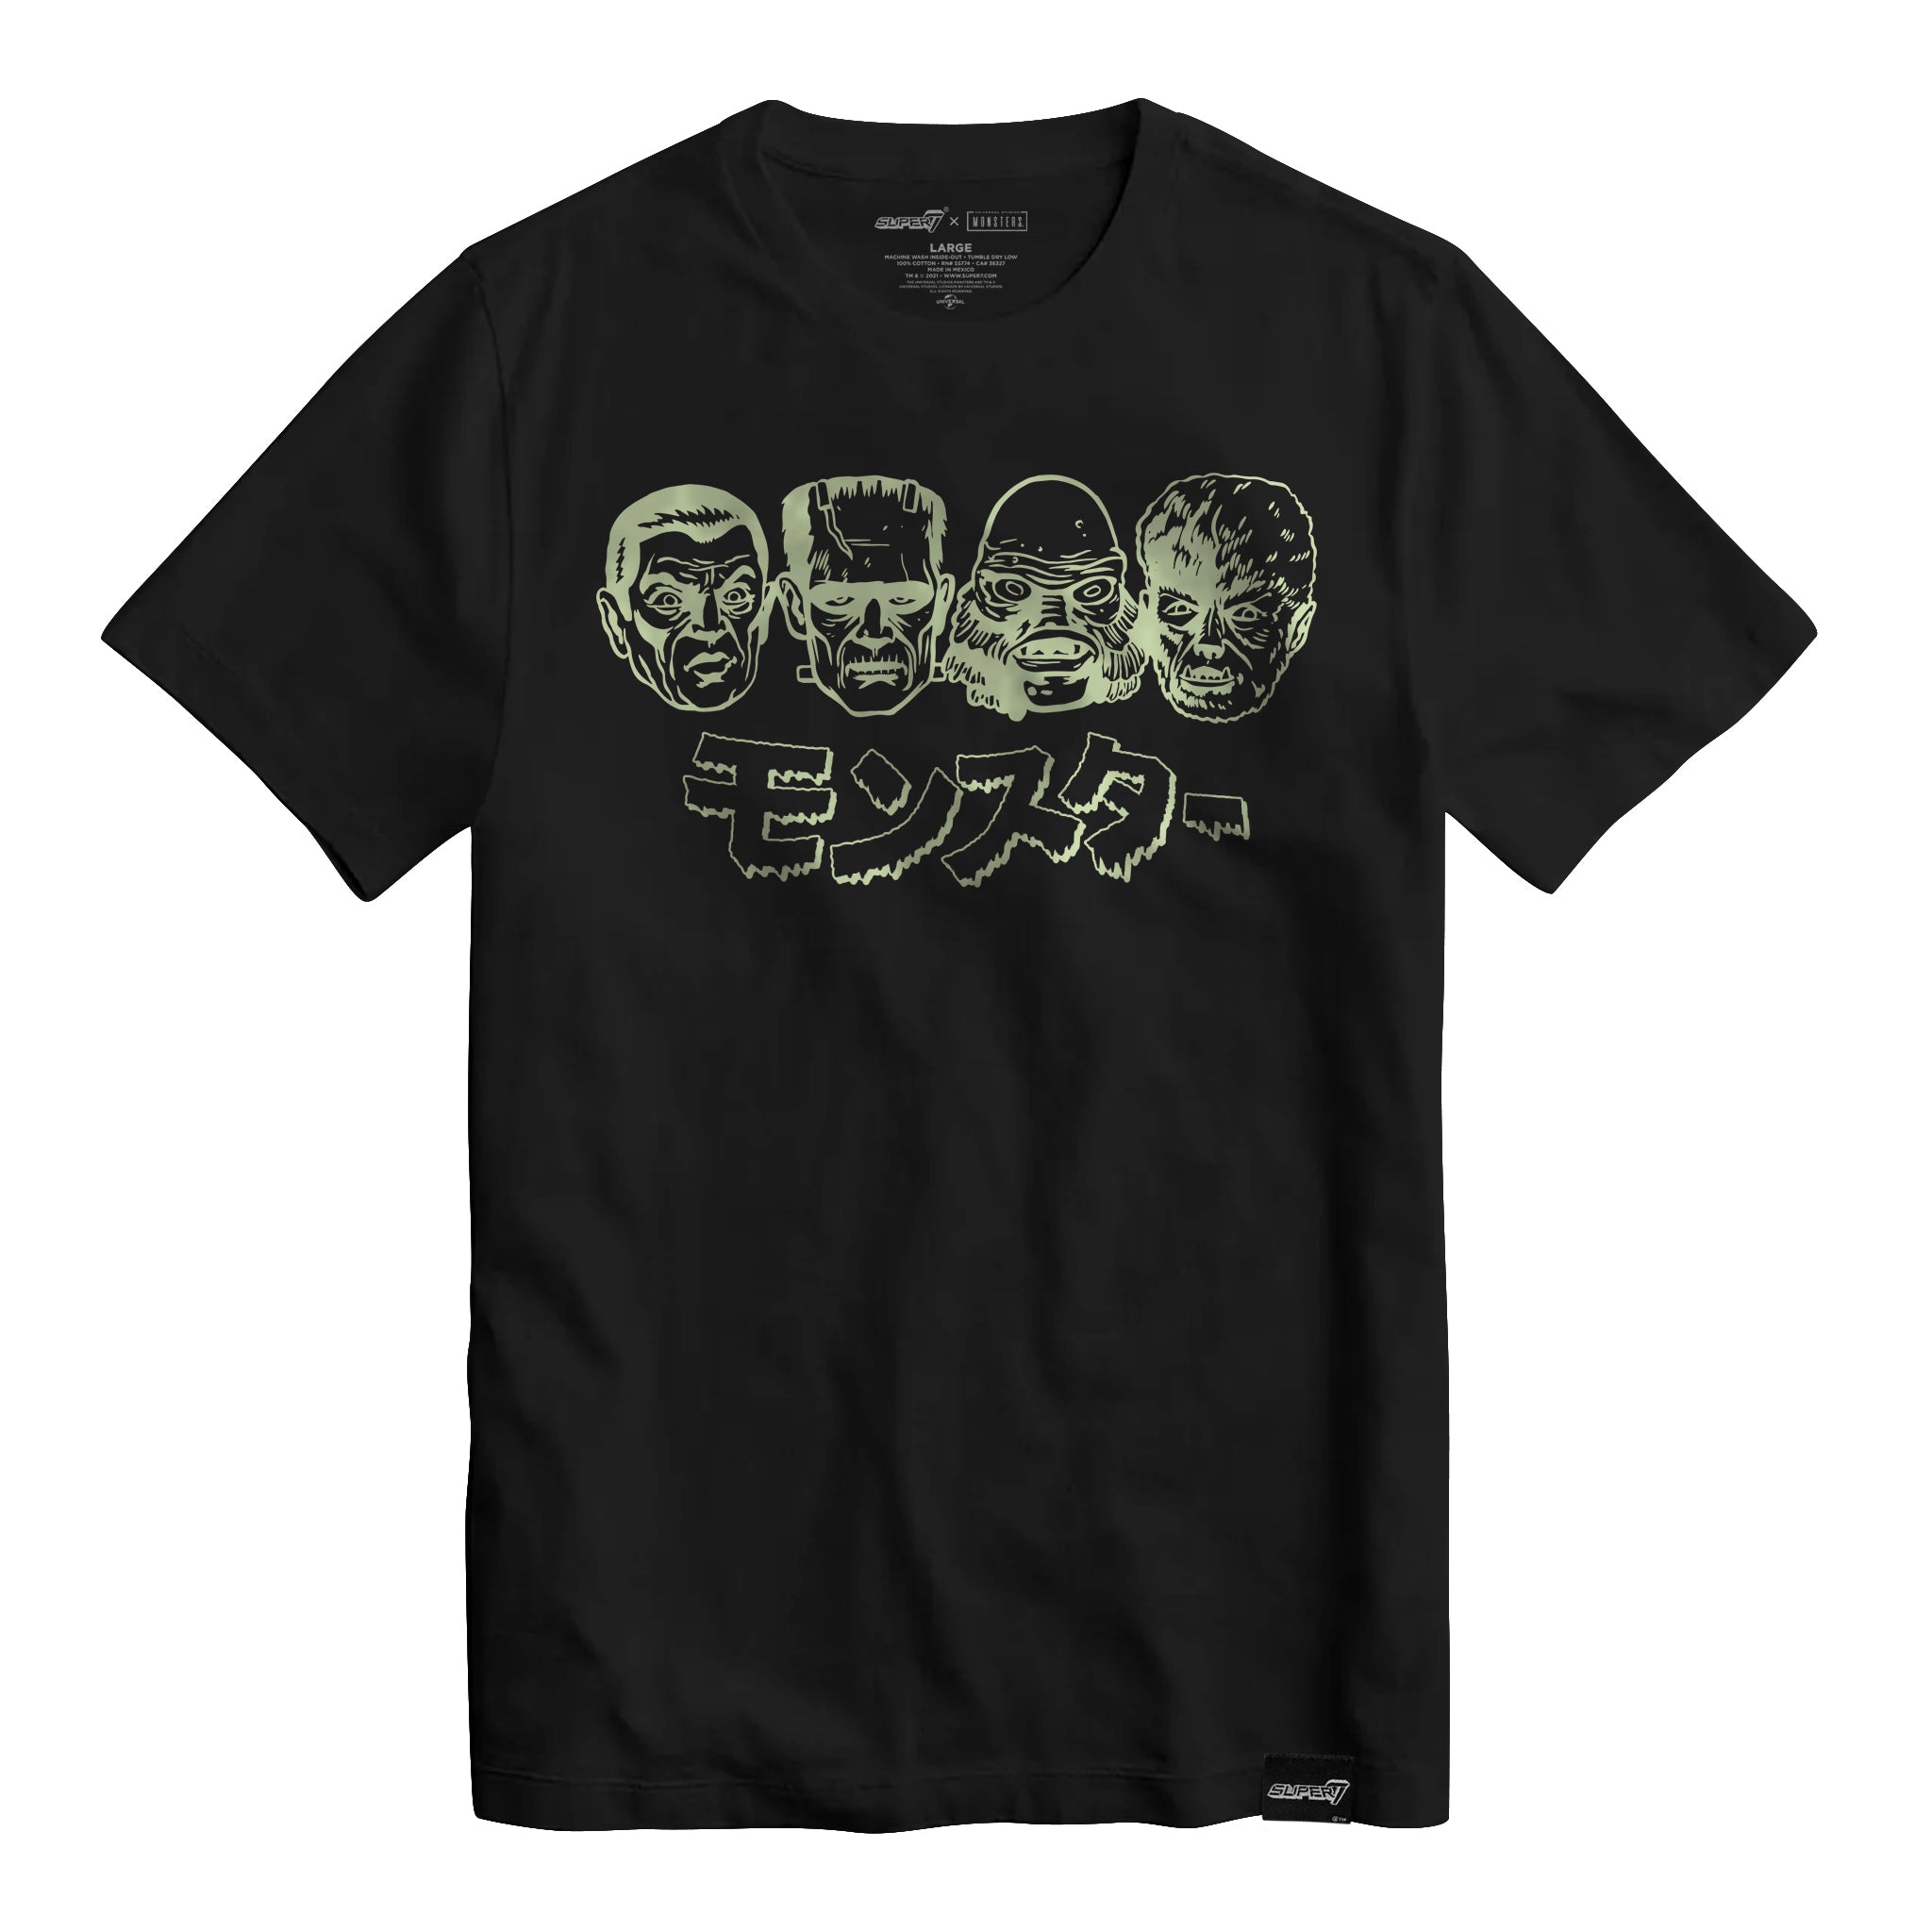 Super7 T-Shirt - Monsters